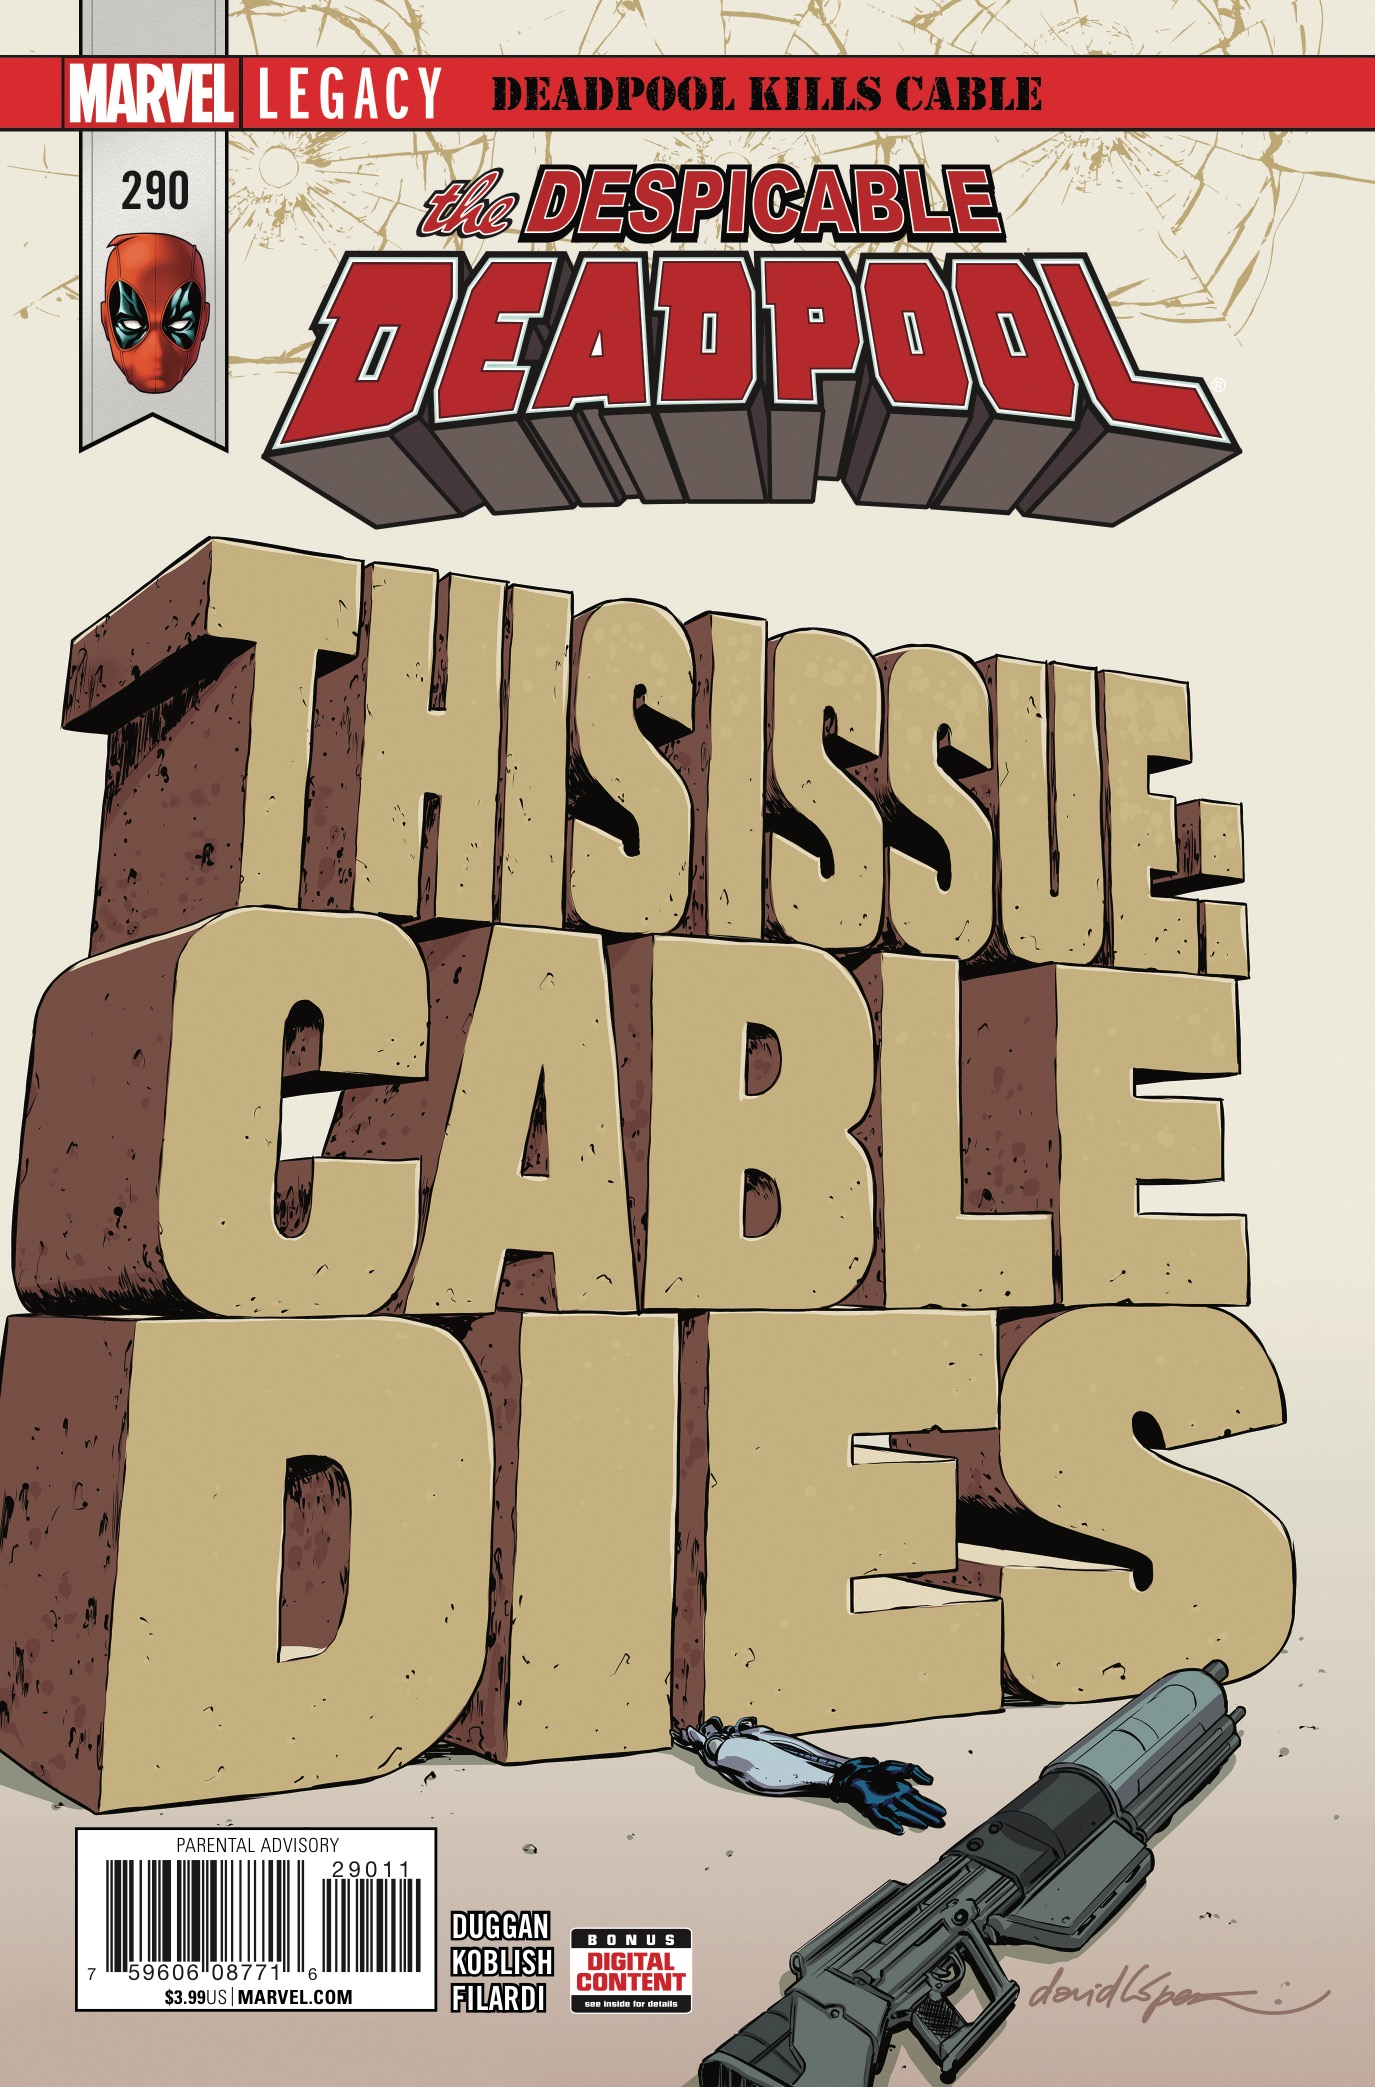 Marvel Preview: Deadpool #290